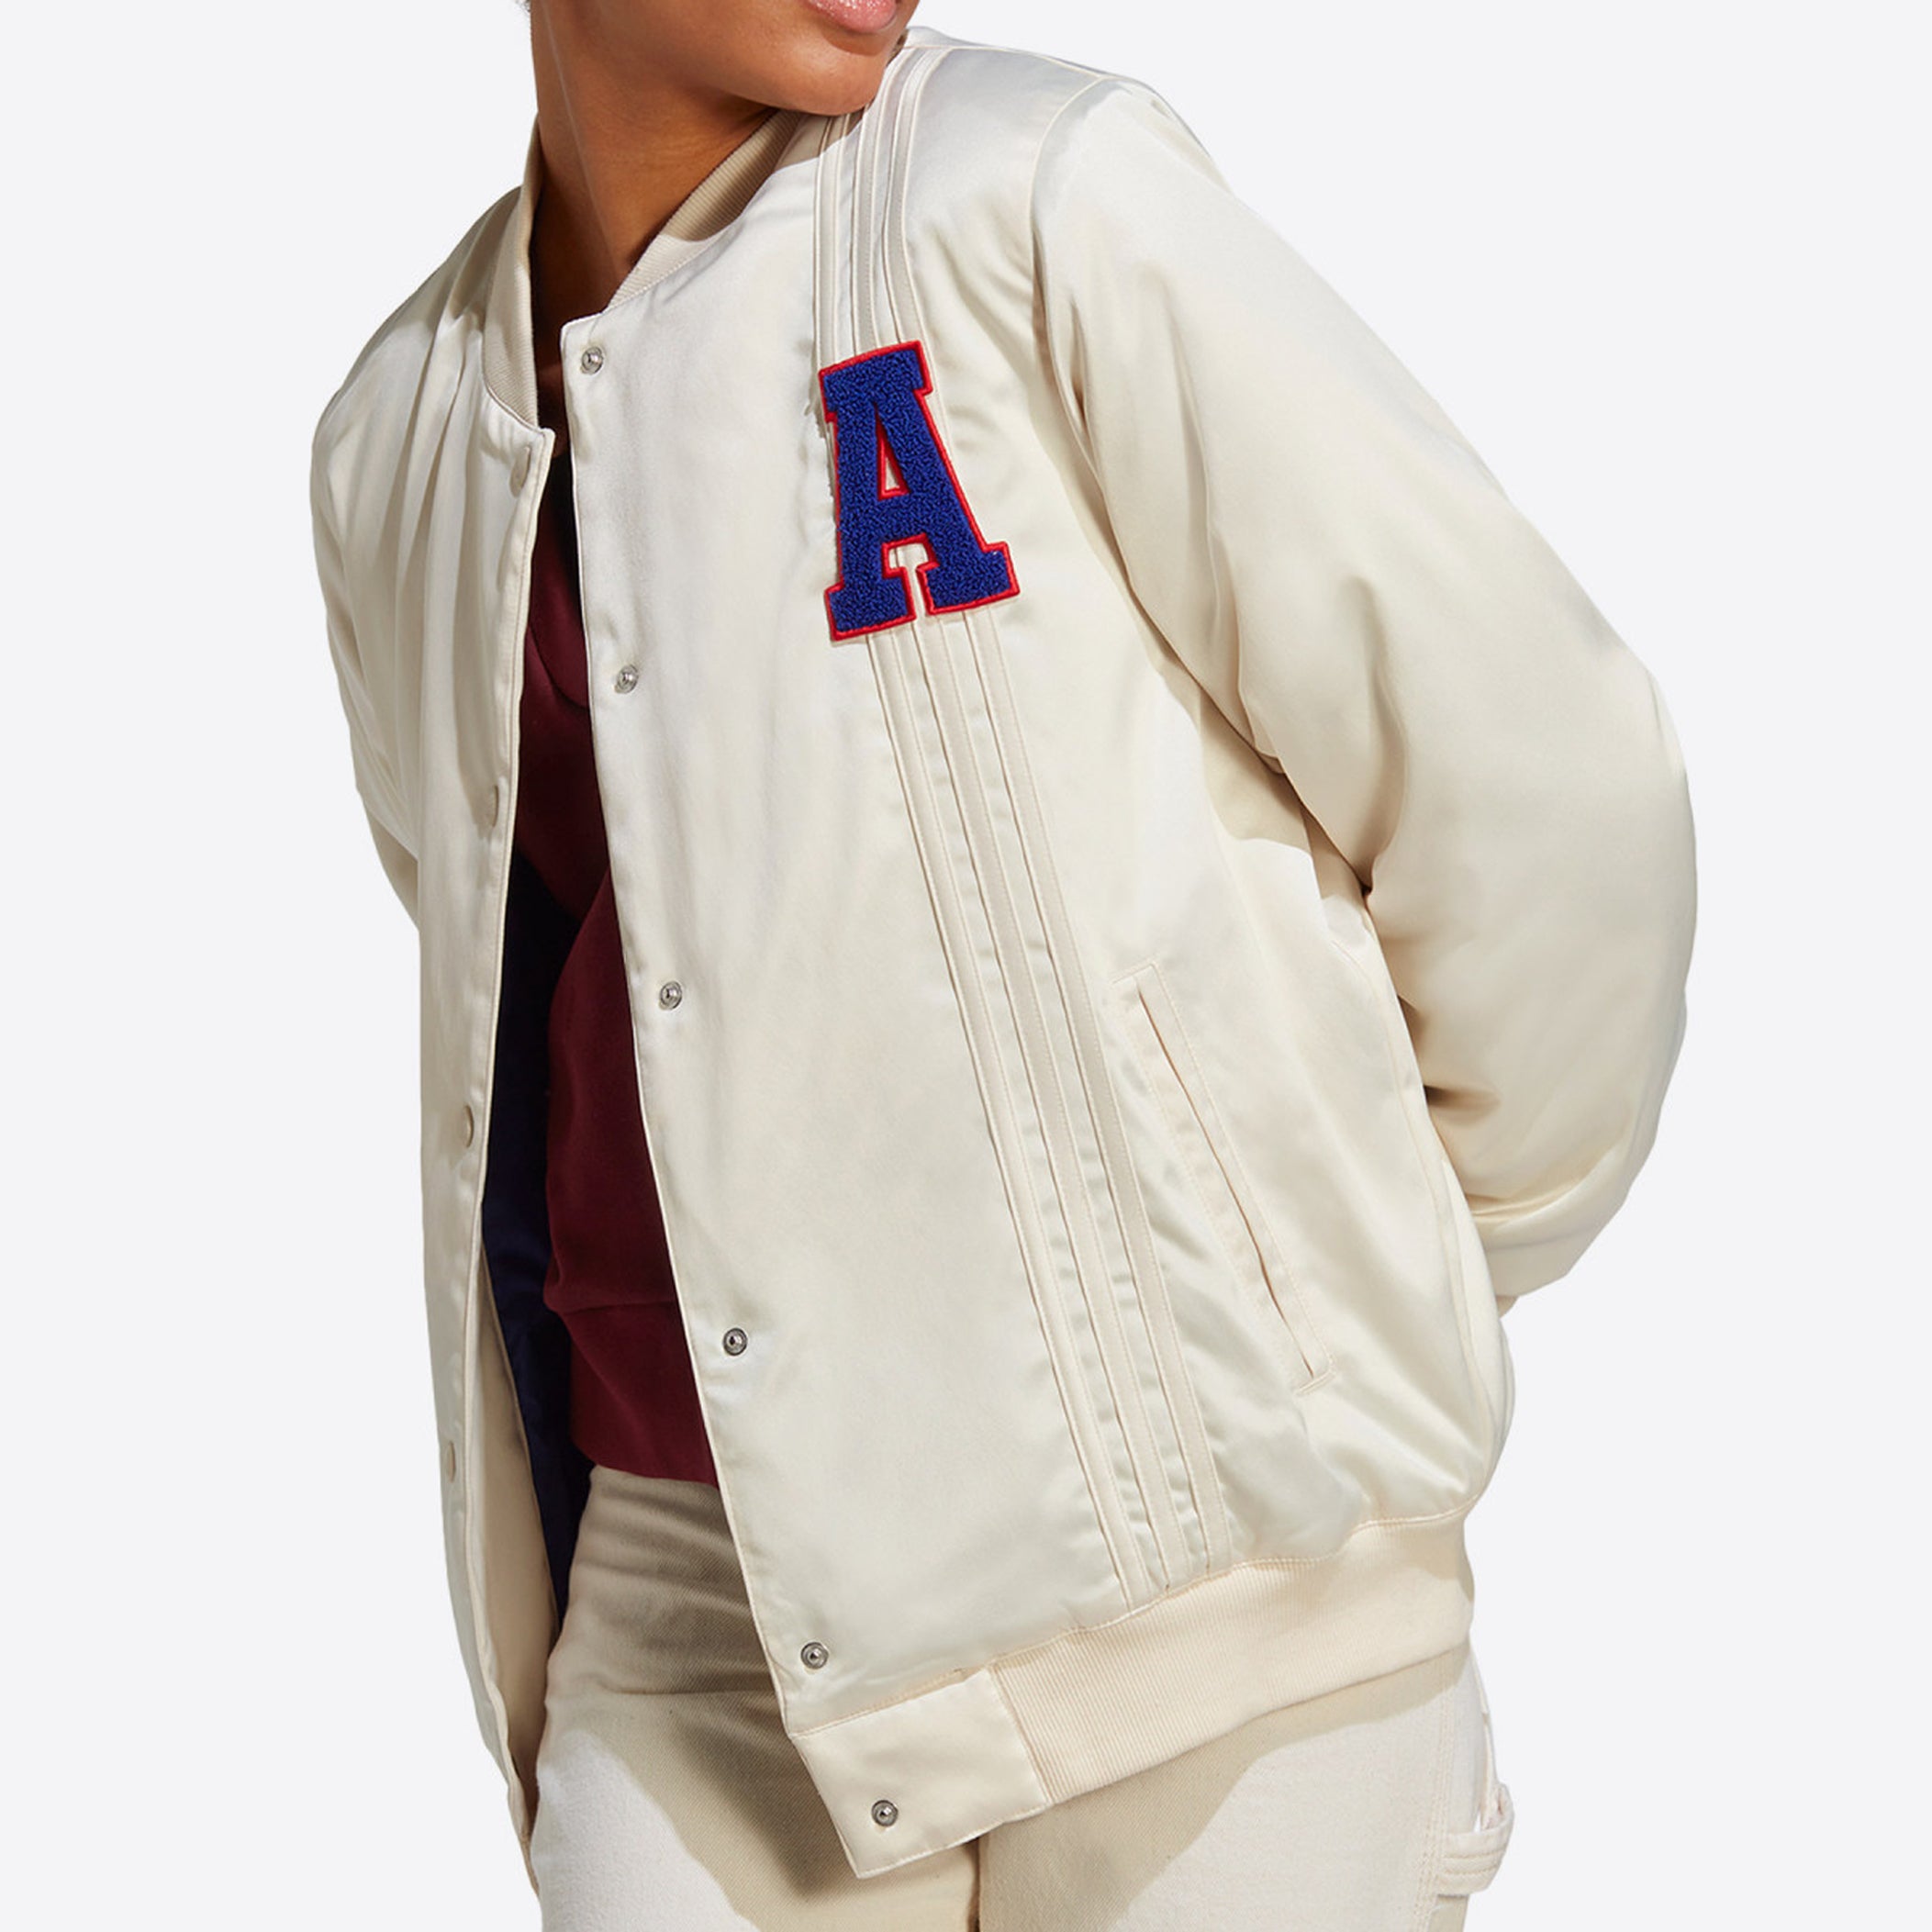 Adidas Varsity jacket